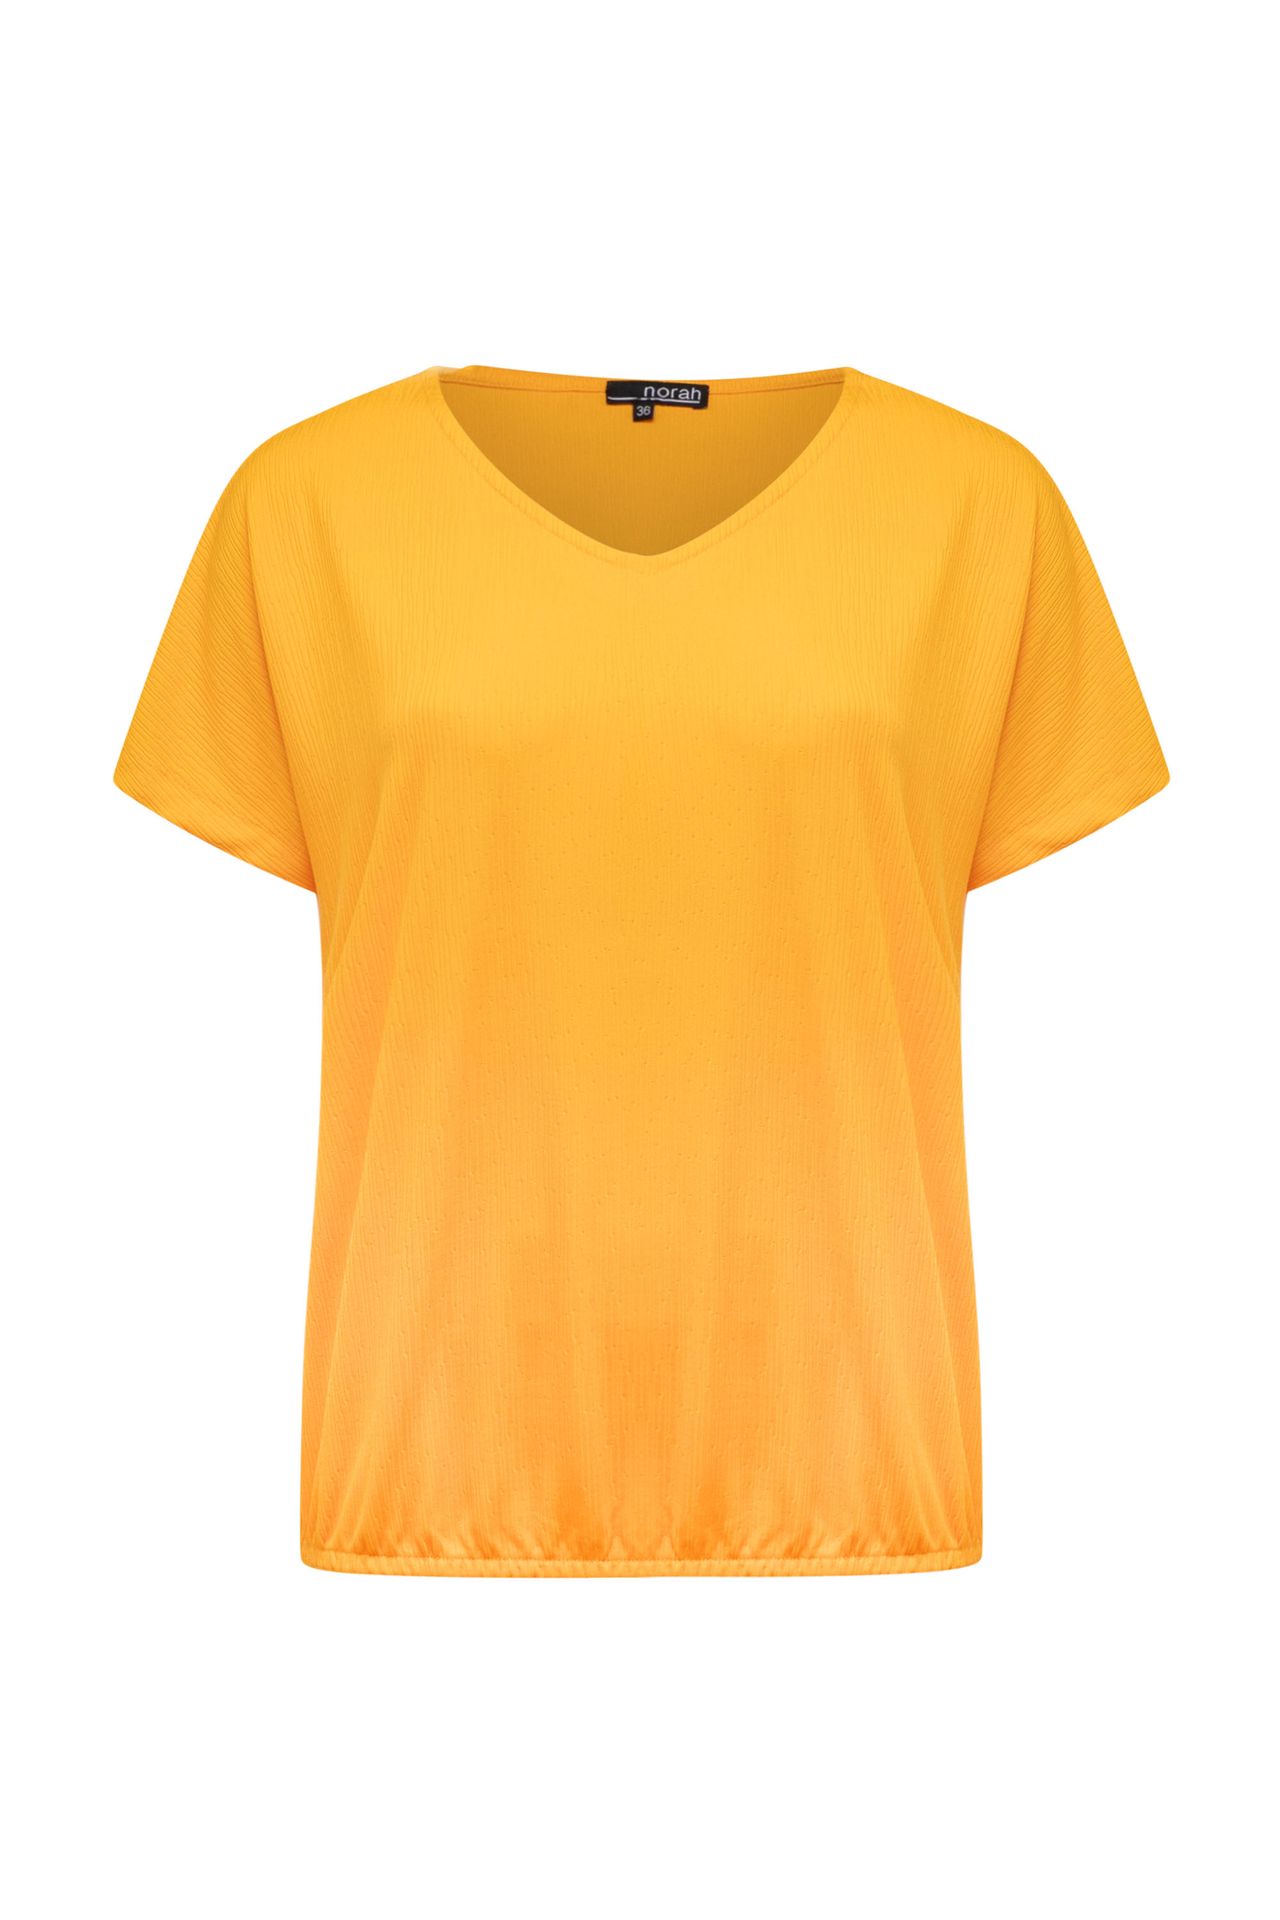 Norah Mangokleurig shirt mango 211648-304